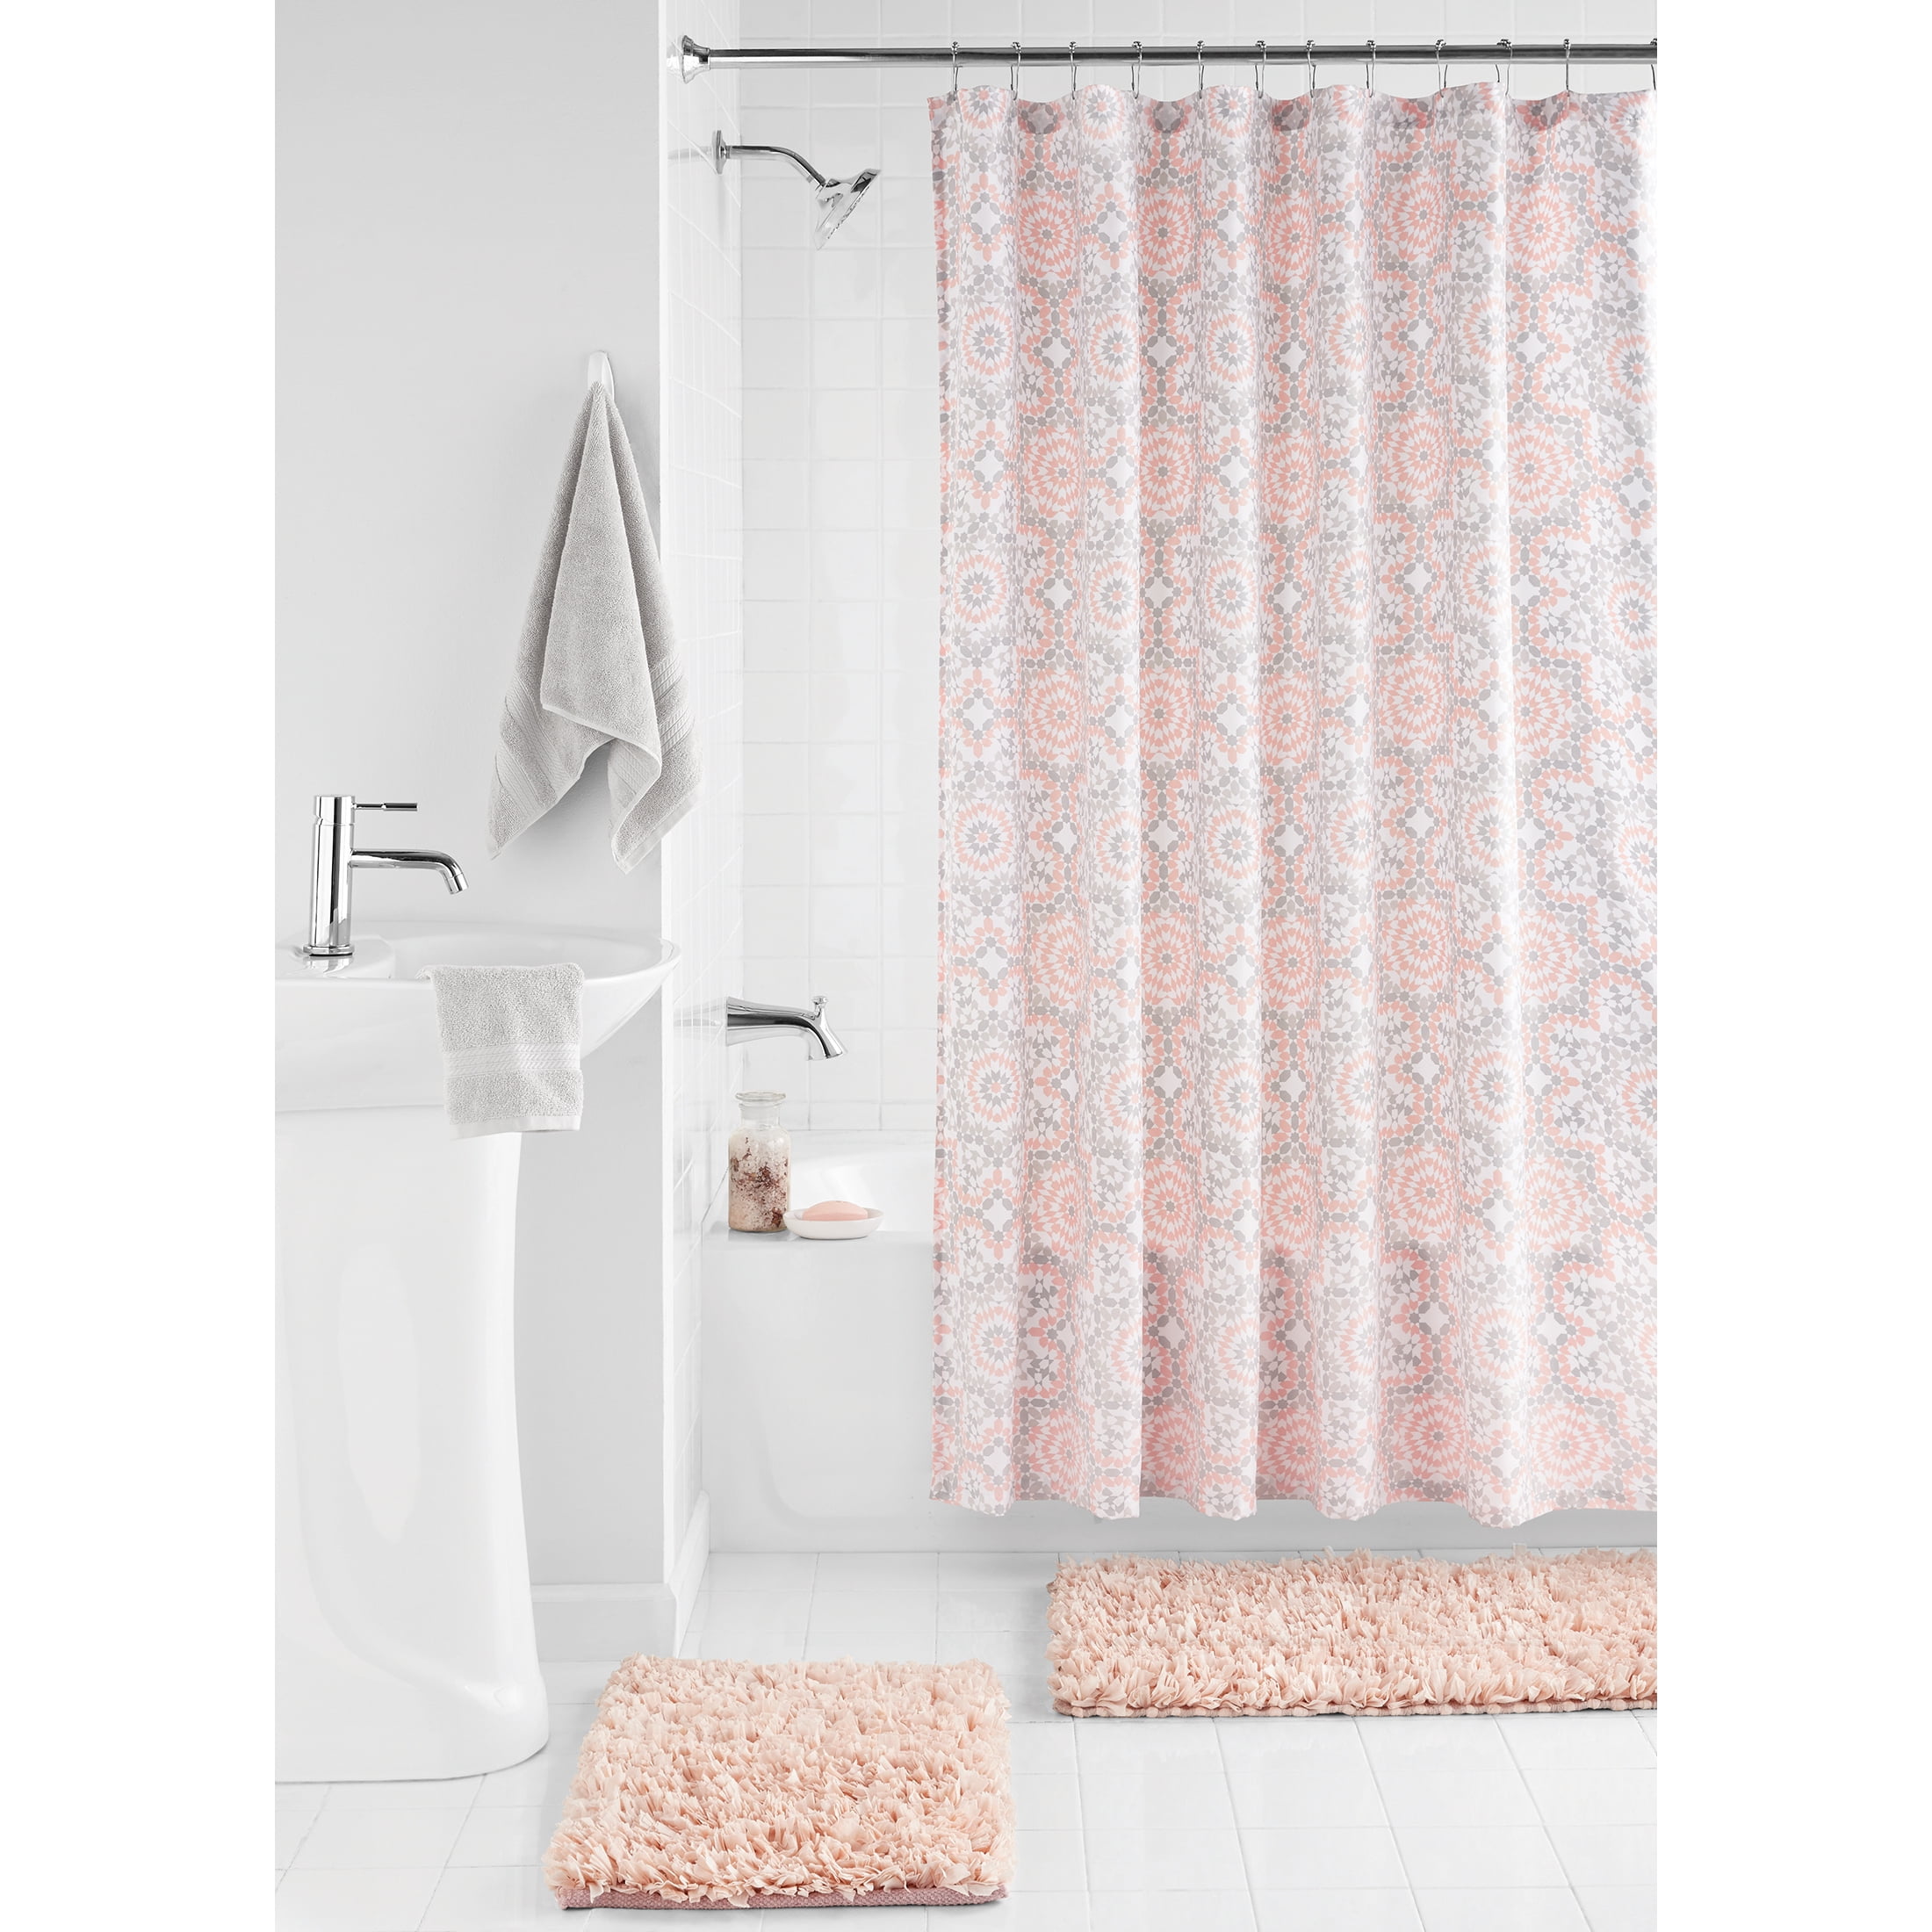 Rusty Metal Texas Star Shower Curtain Bathroom Waterproof Fabric Decor Mat Hooks 